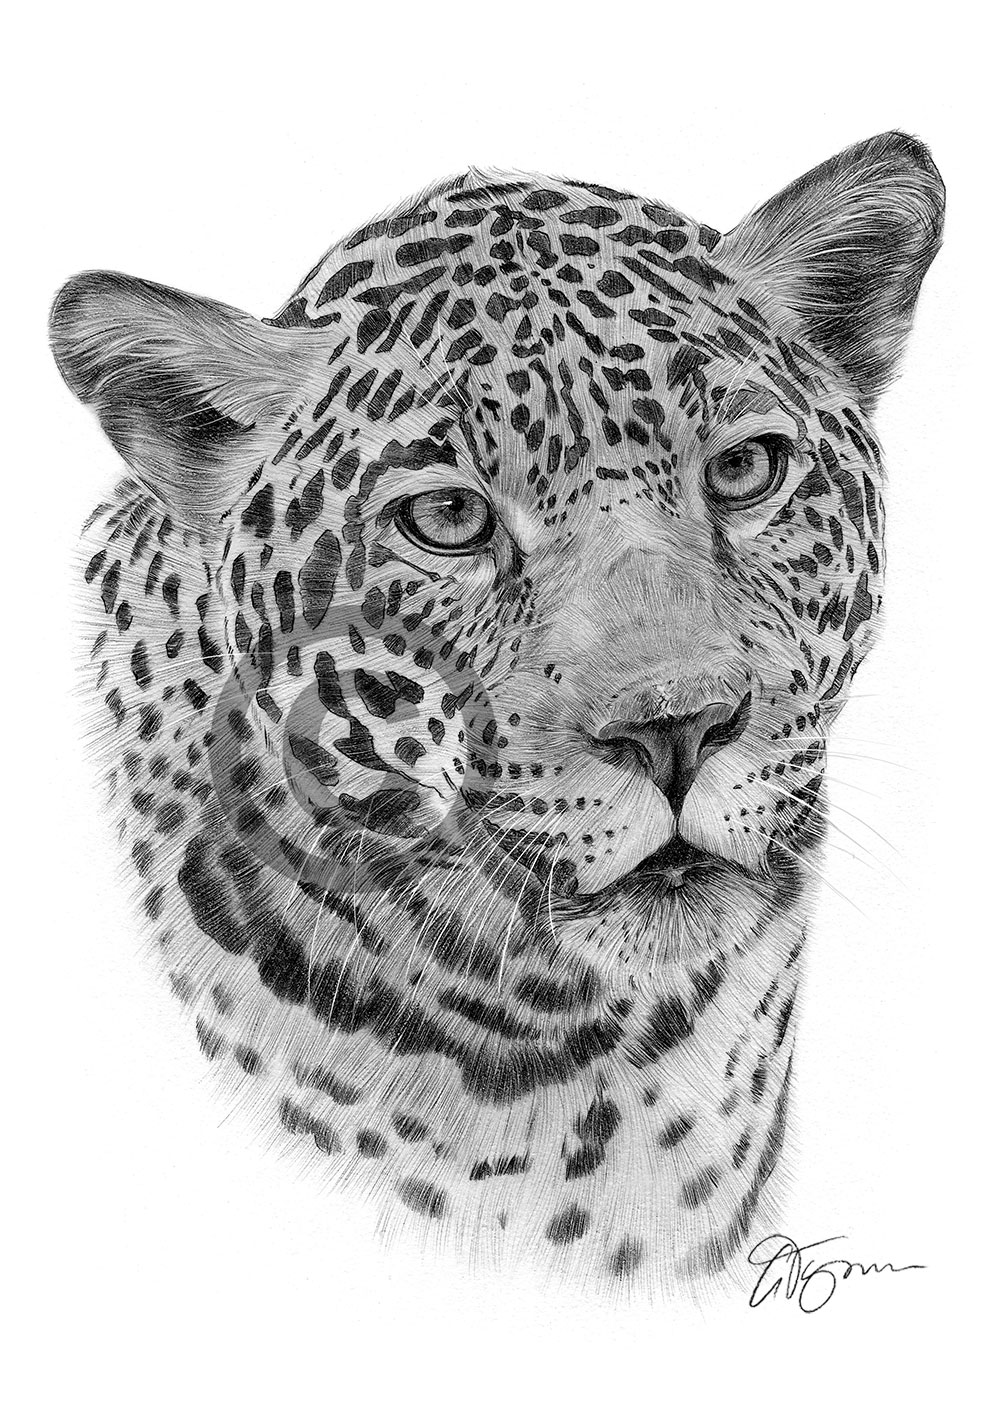 Pencil drawing of a jaguar by UK artist Gary Tymon